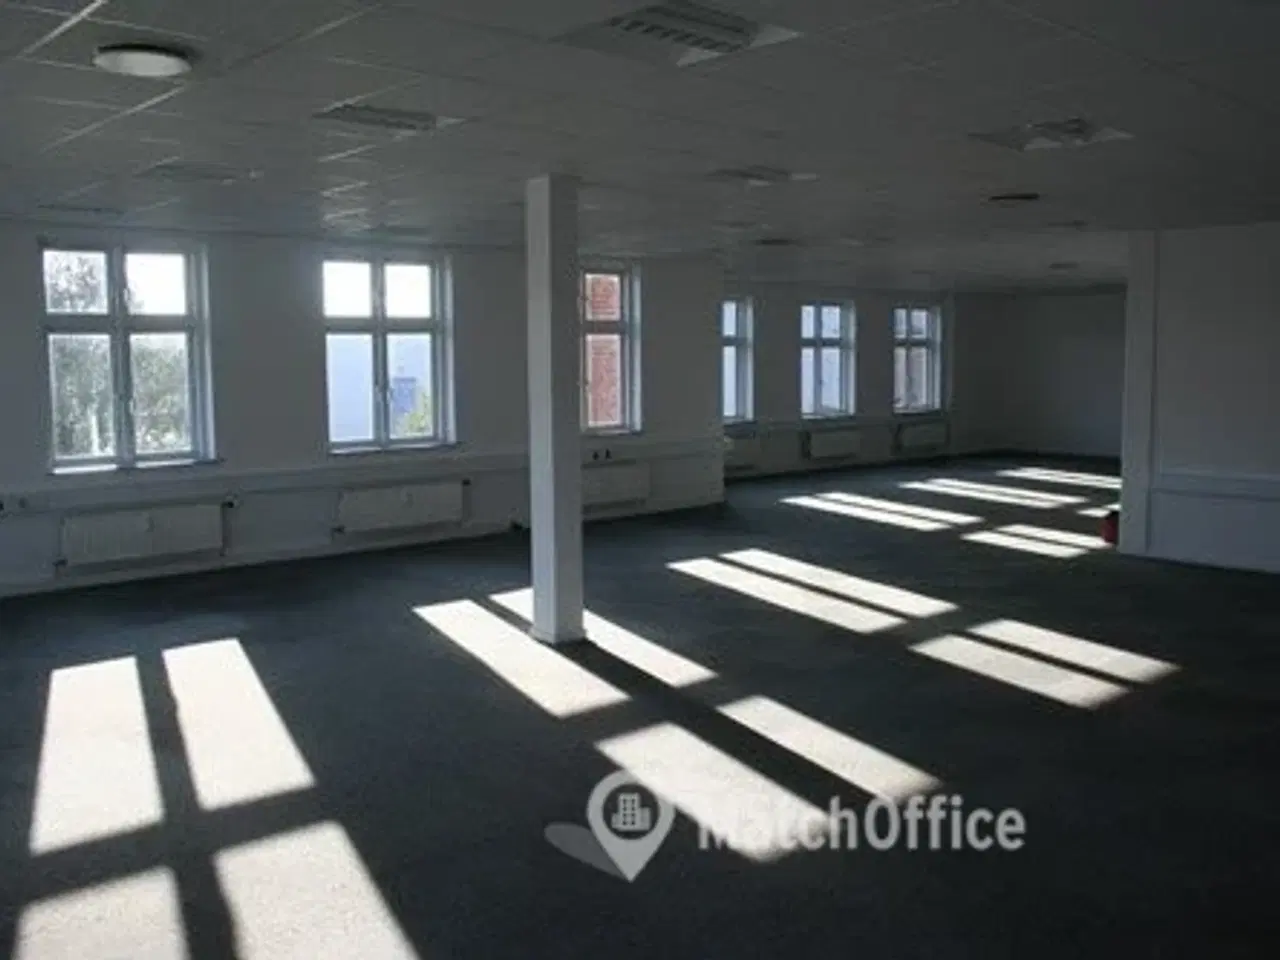 Billede 1 - 152 m2 kontorlokale